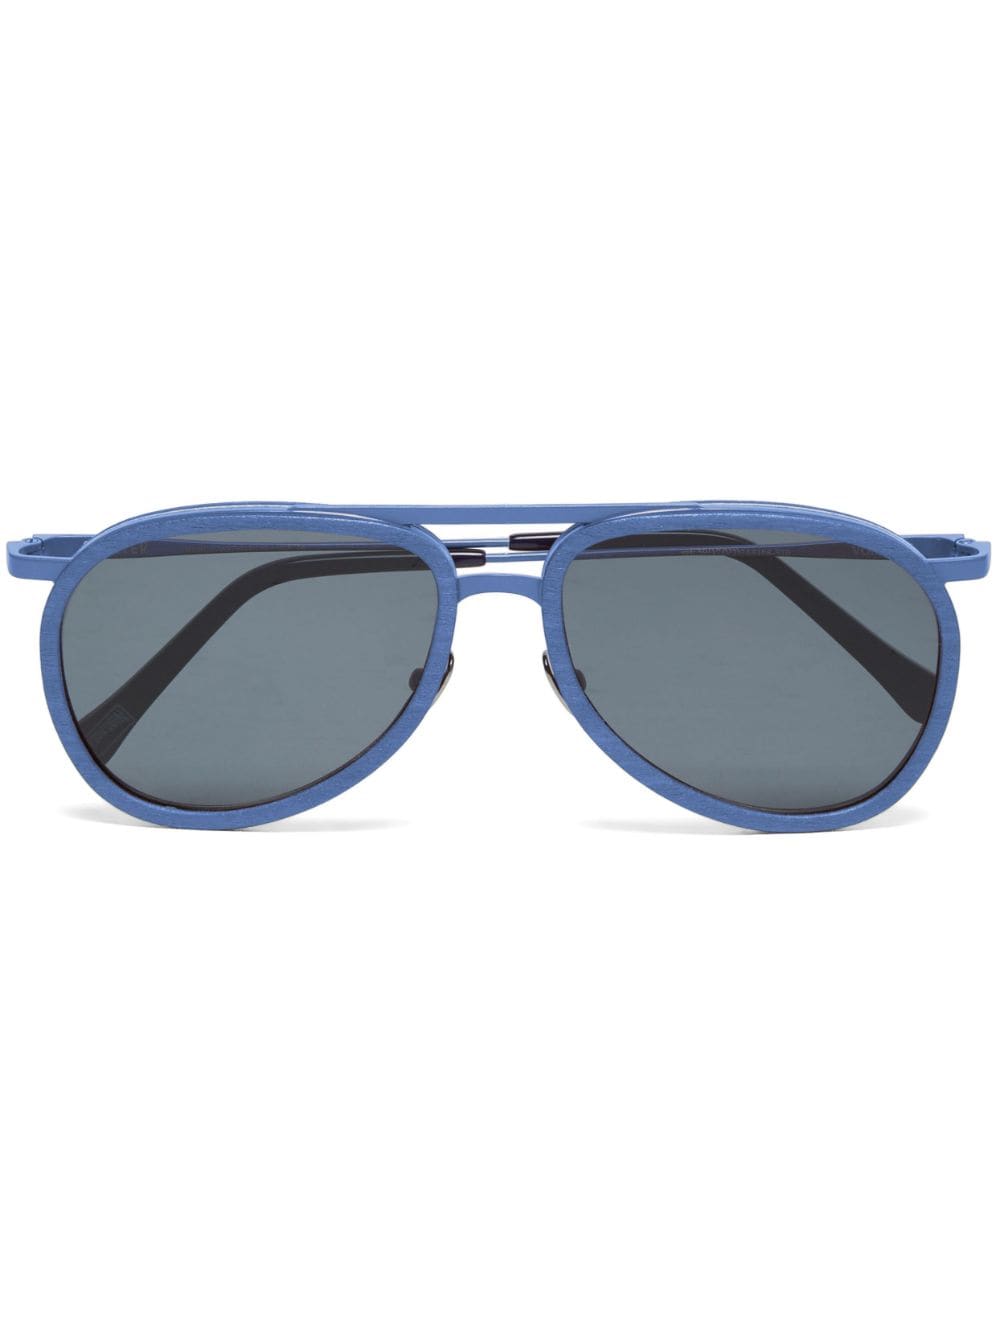 Vilebrequin x Shelter aviator sunglasses - Blu